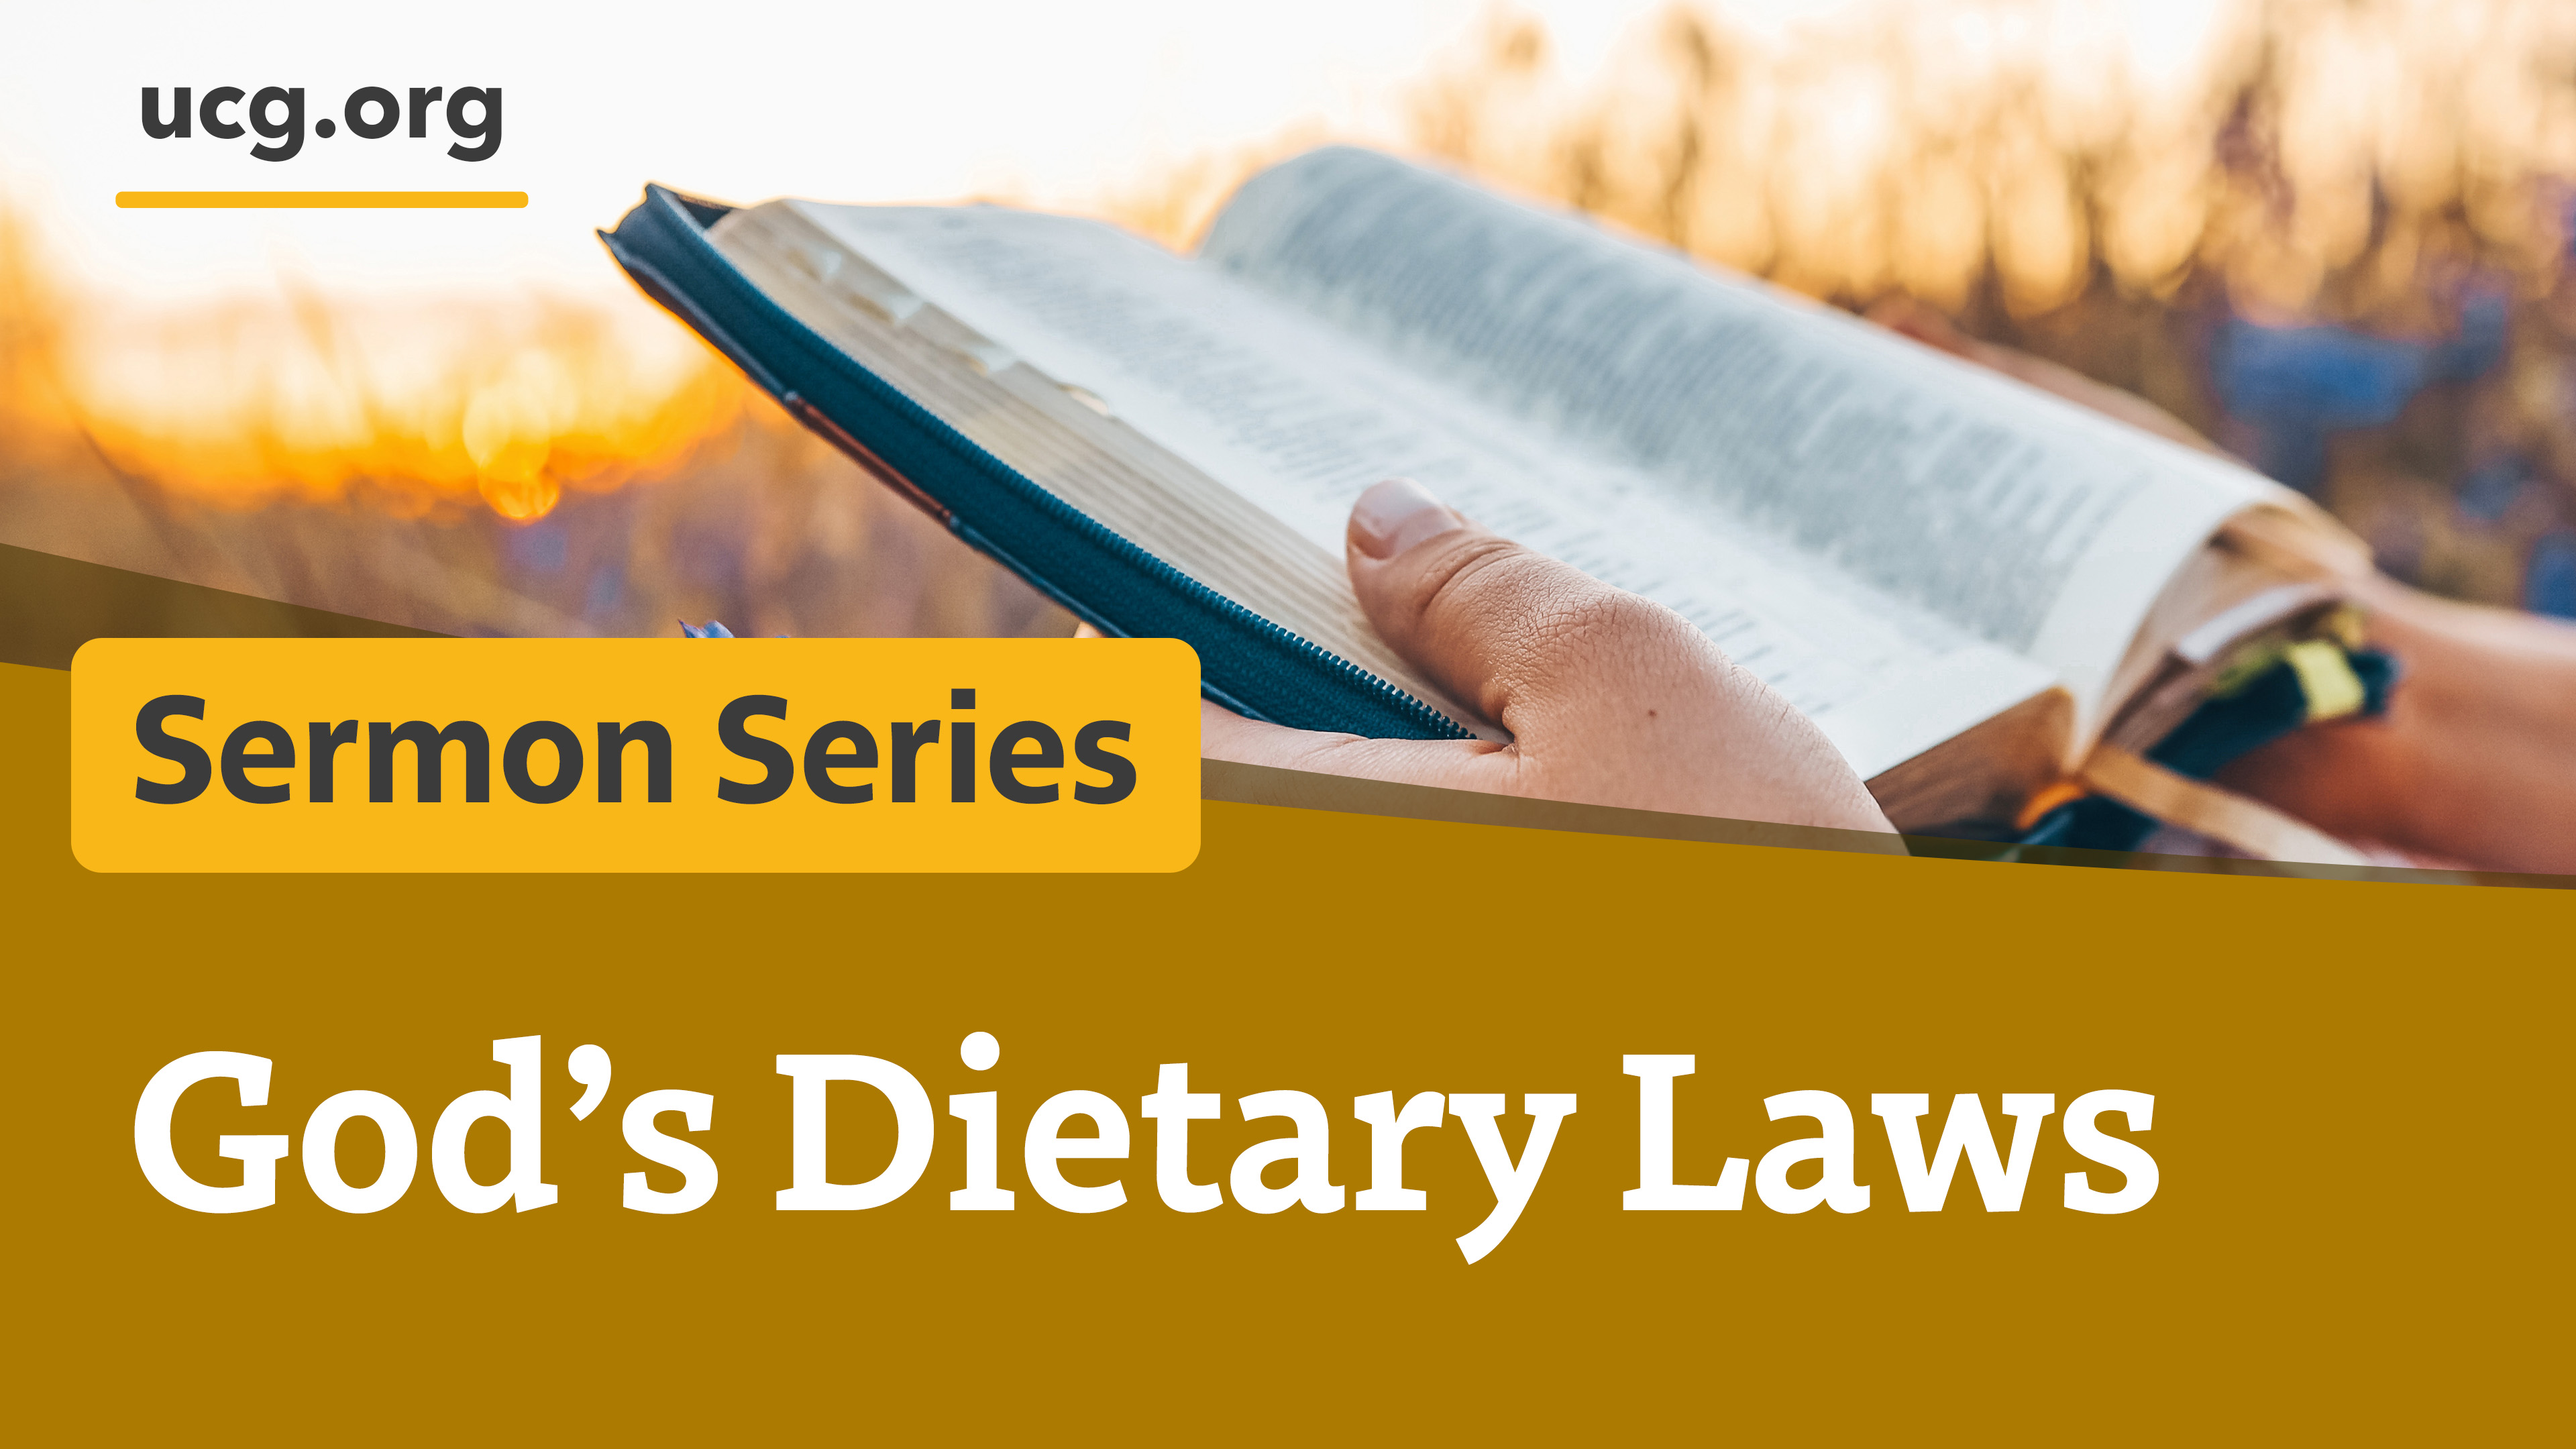 God's dietary laws series